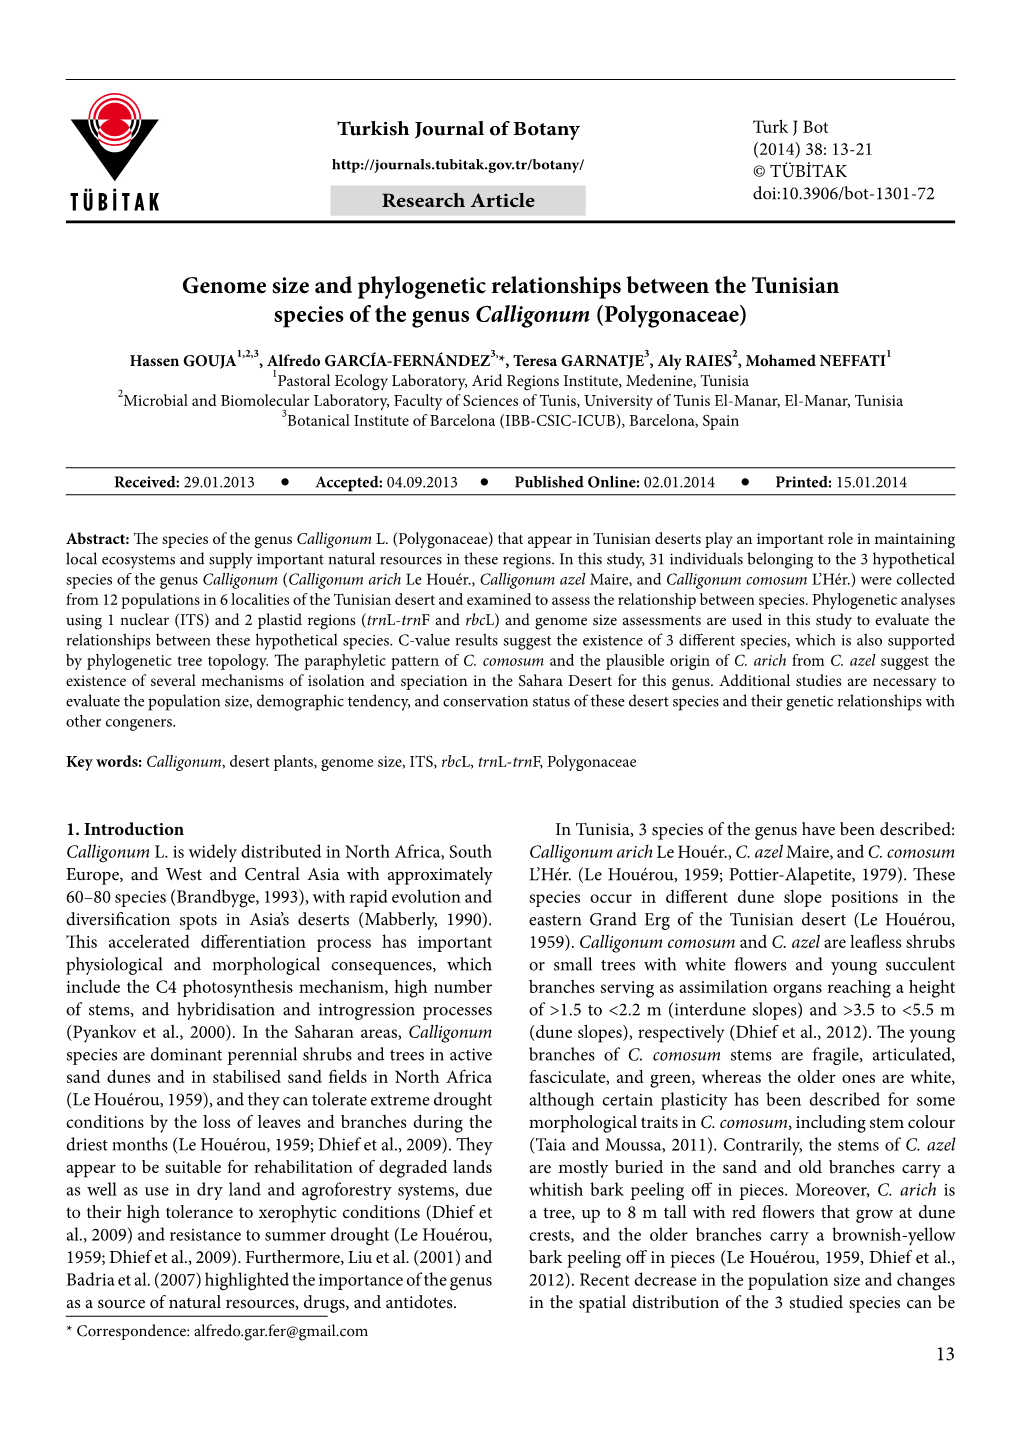 Genome Size and Phylogenetic Relationships Between the Tunisian Species of the Genus Calligonum (Polygonaceae)